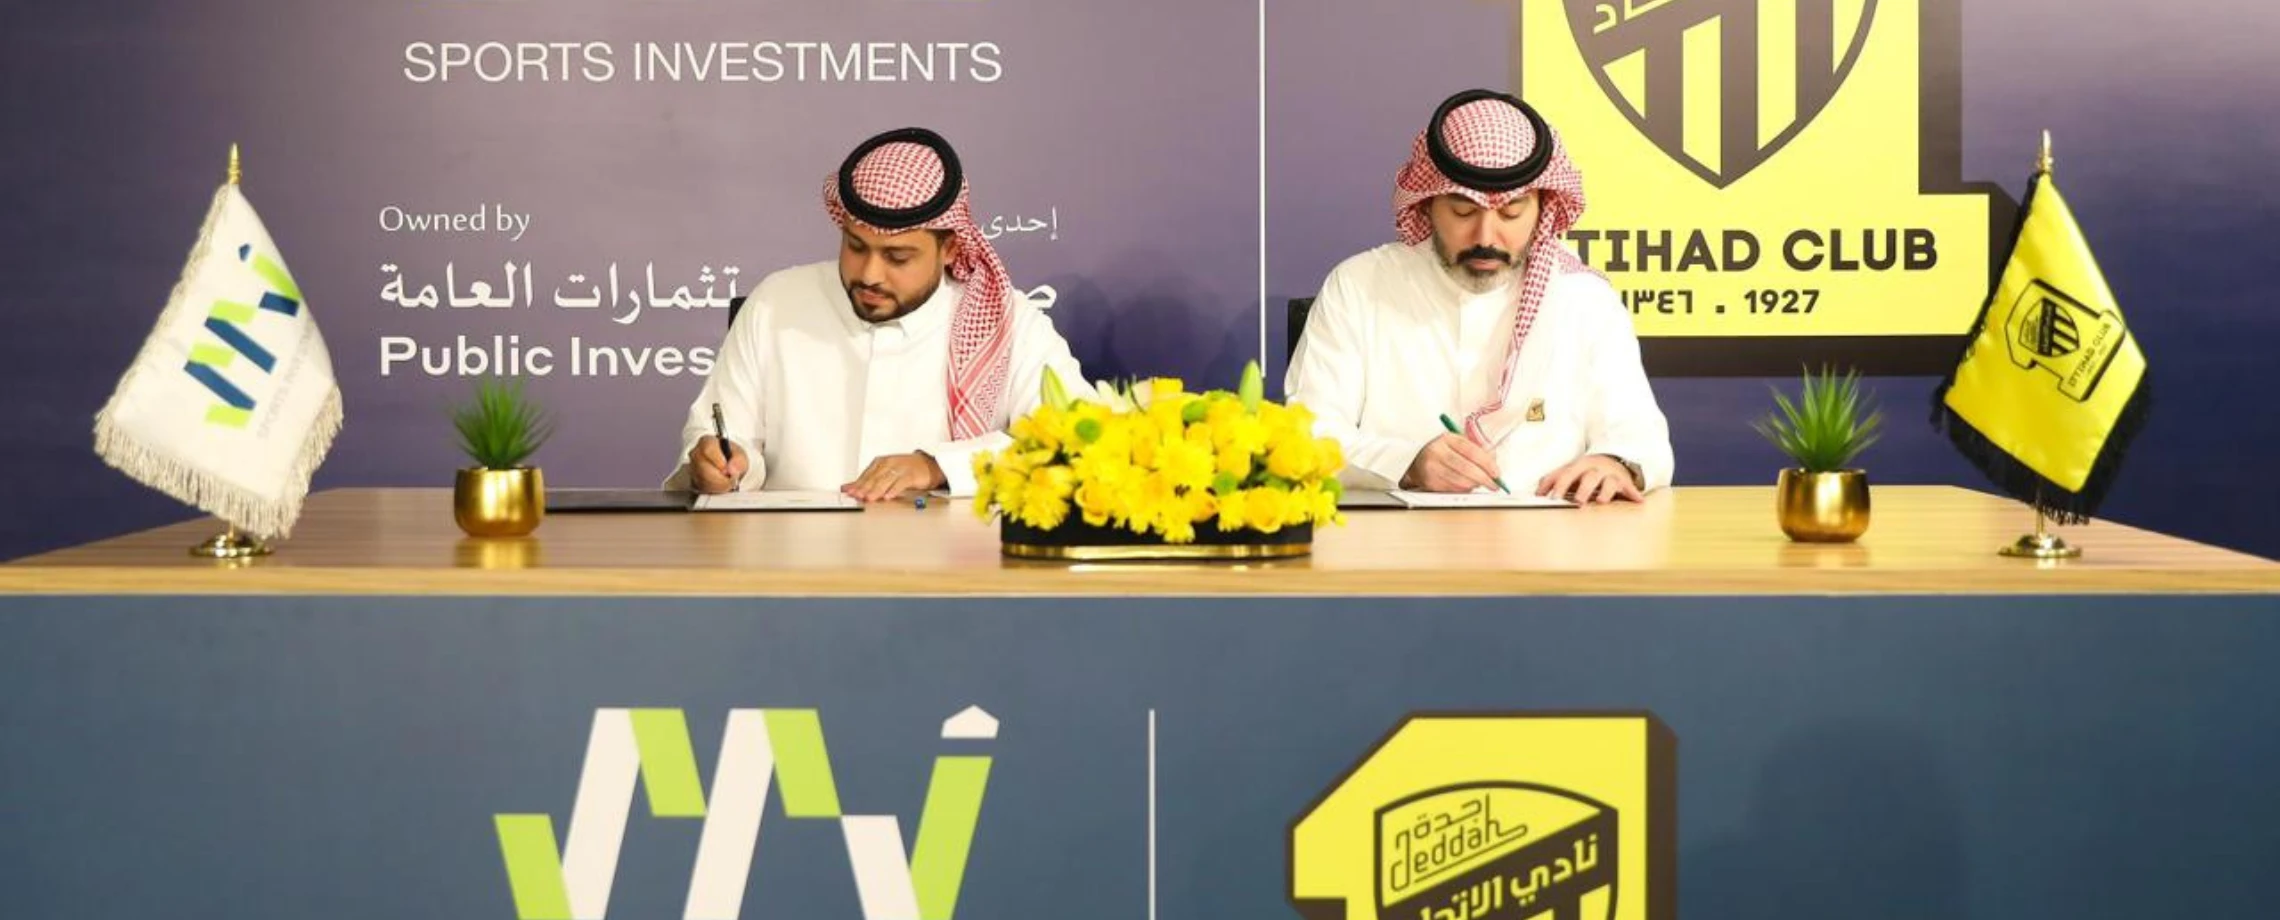  SRJ Sports Investments announces Gold Sponsorship of Al-Ittihad Club